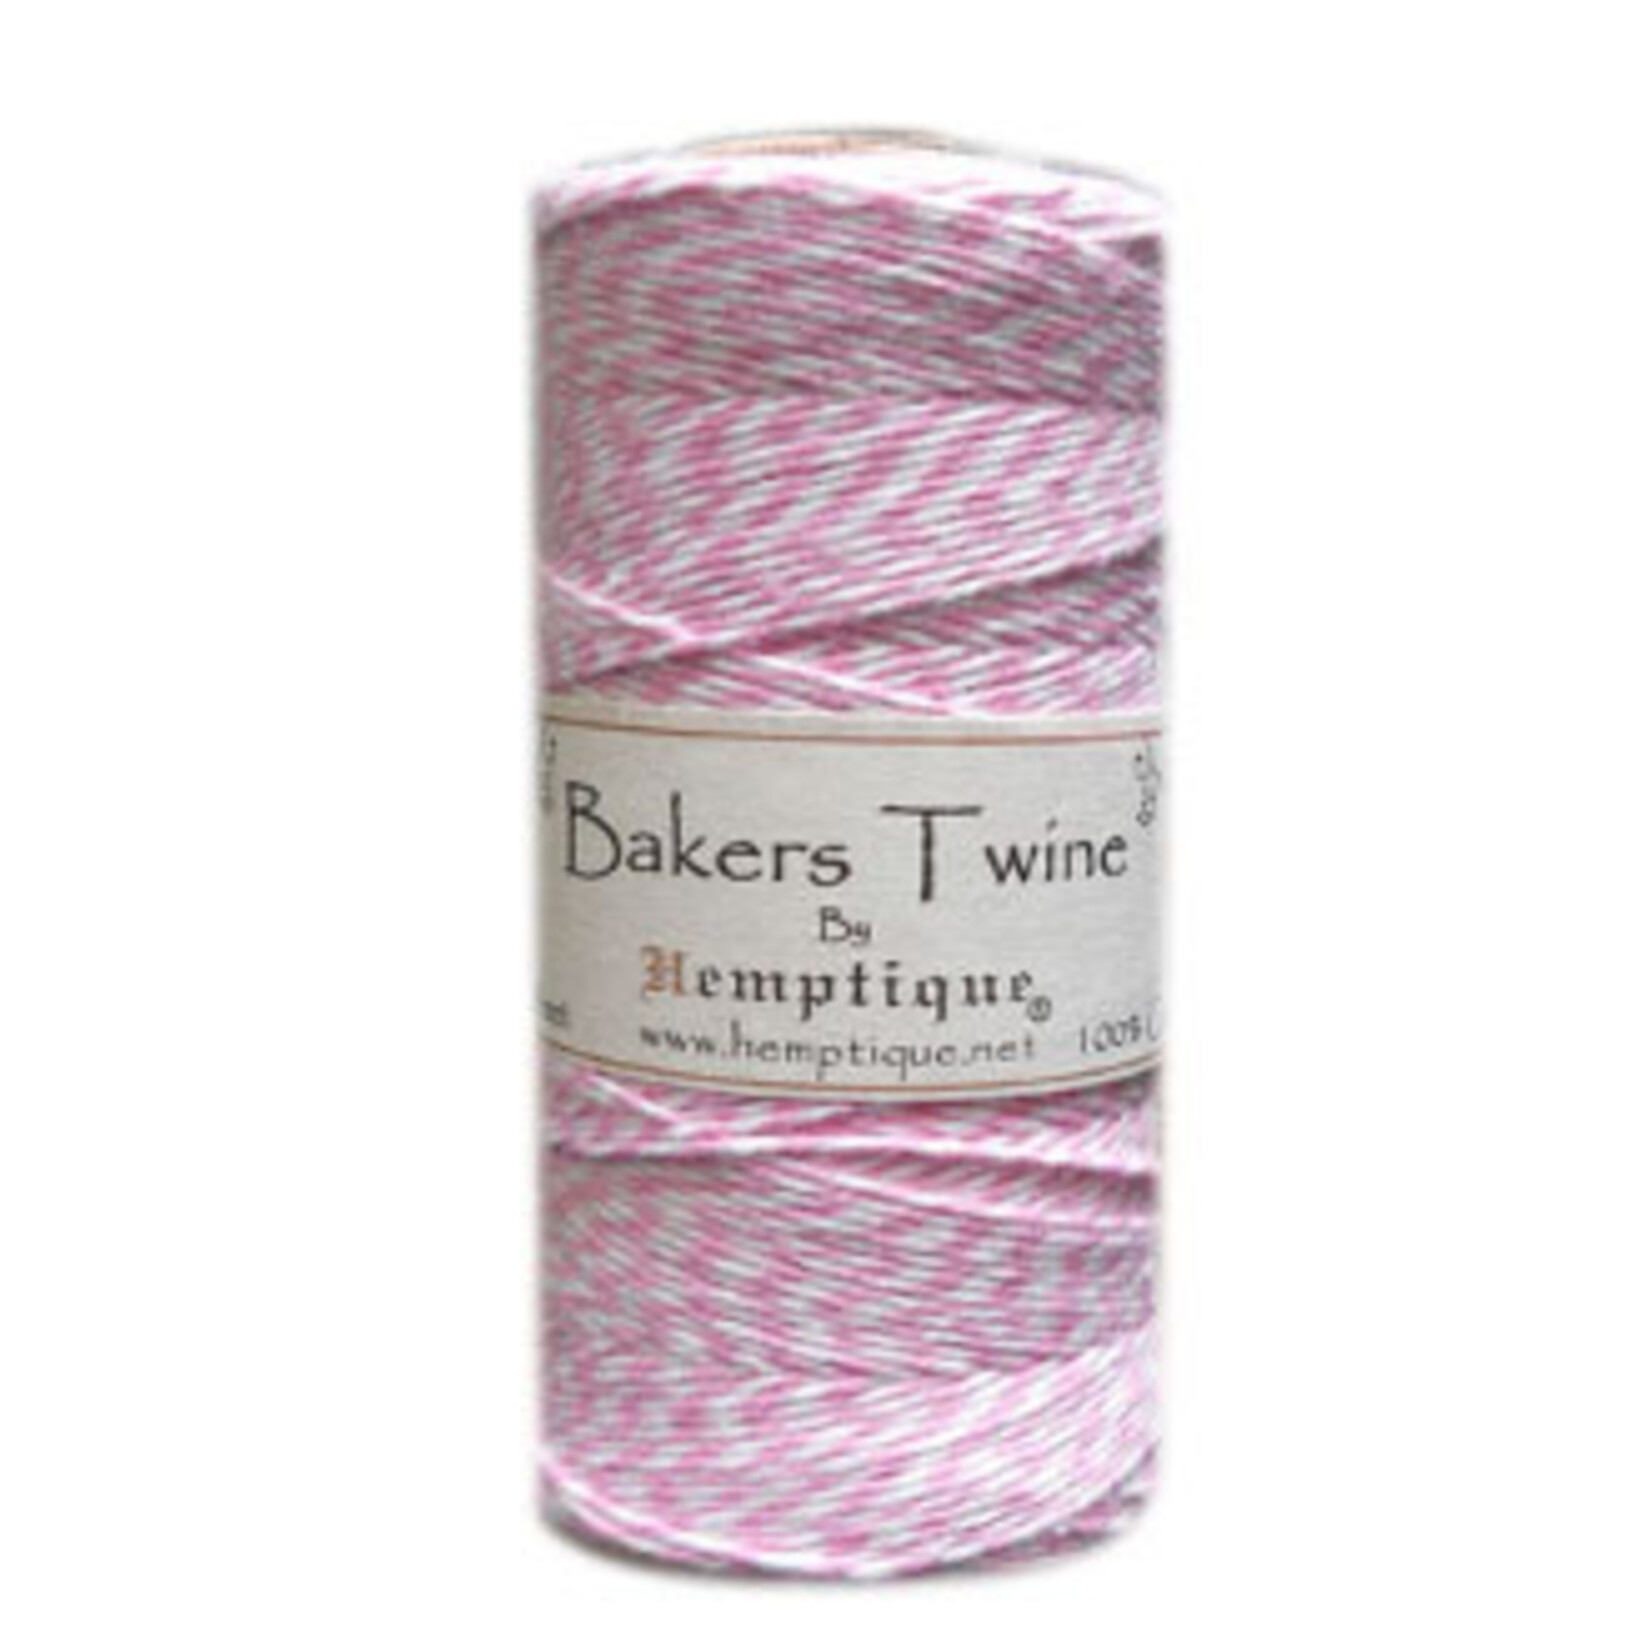 Hemptique Bakers Twine 410Ft Light Pink / White